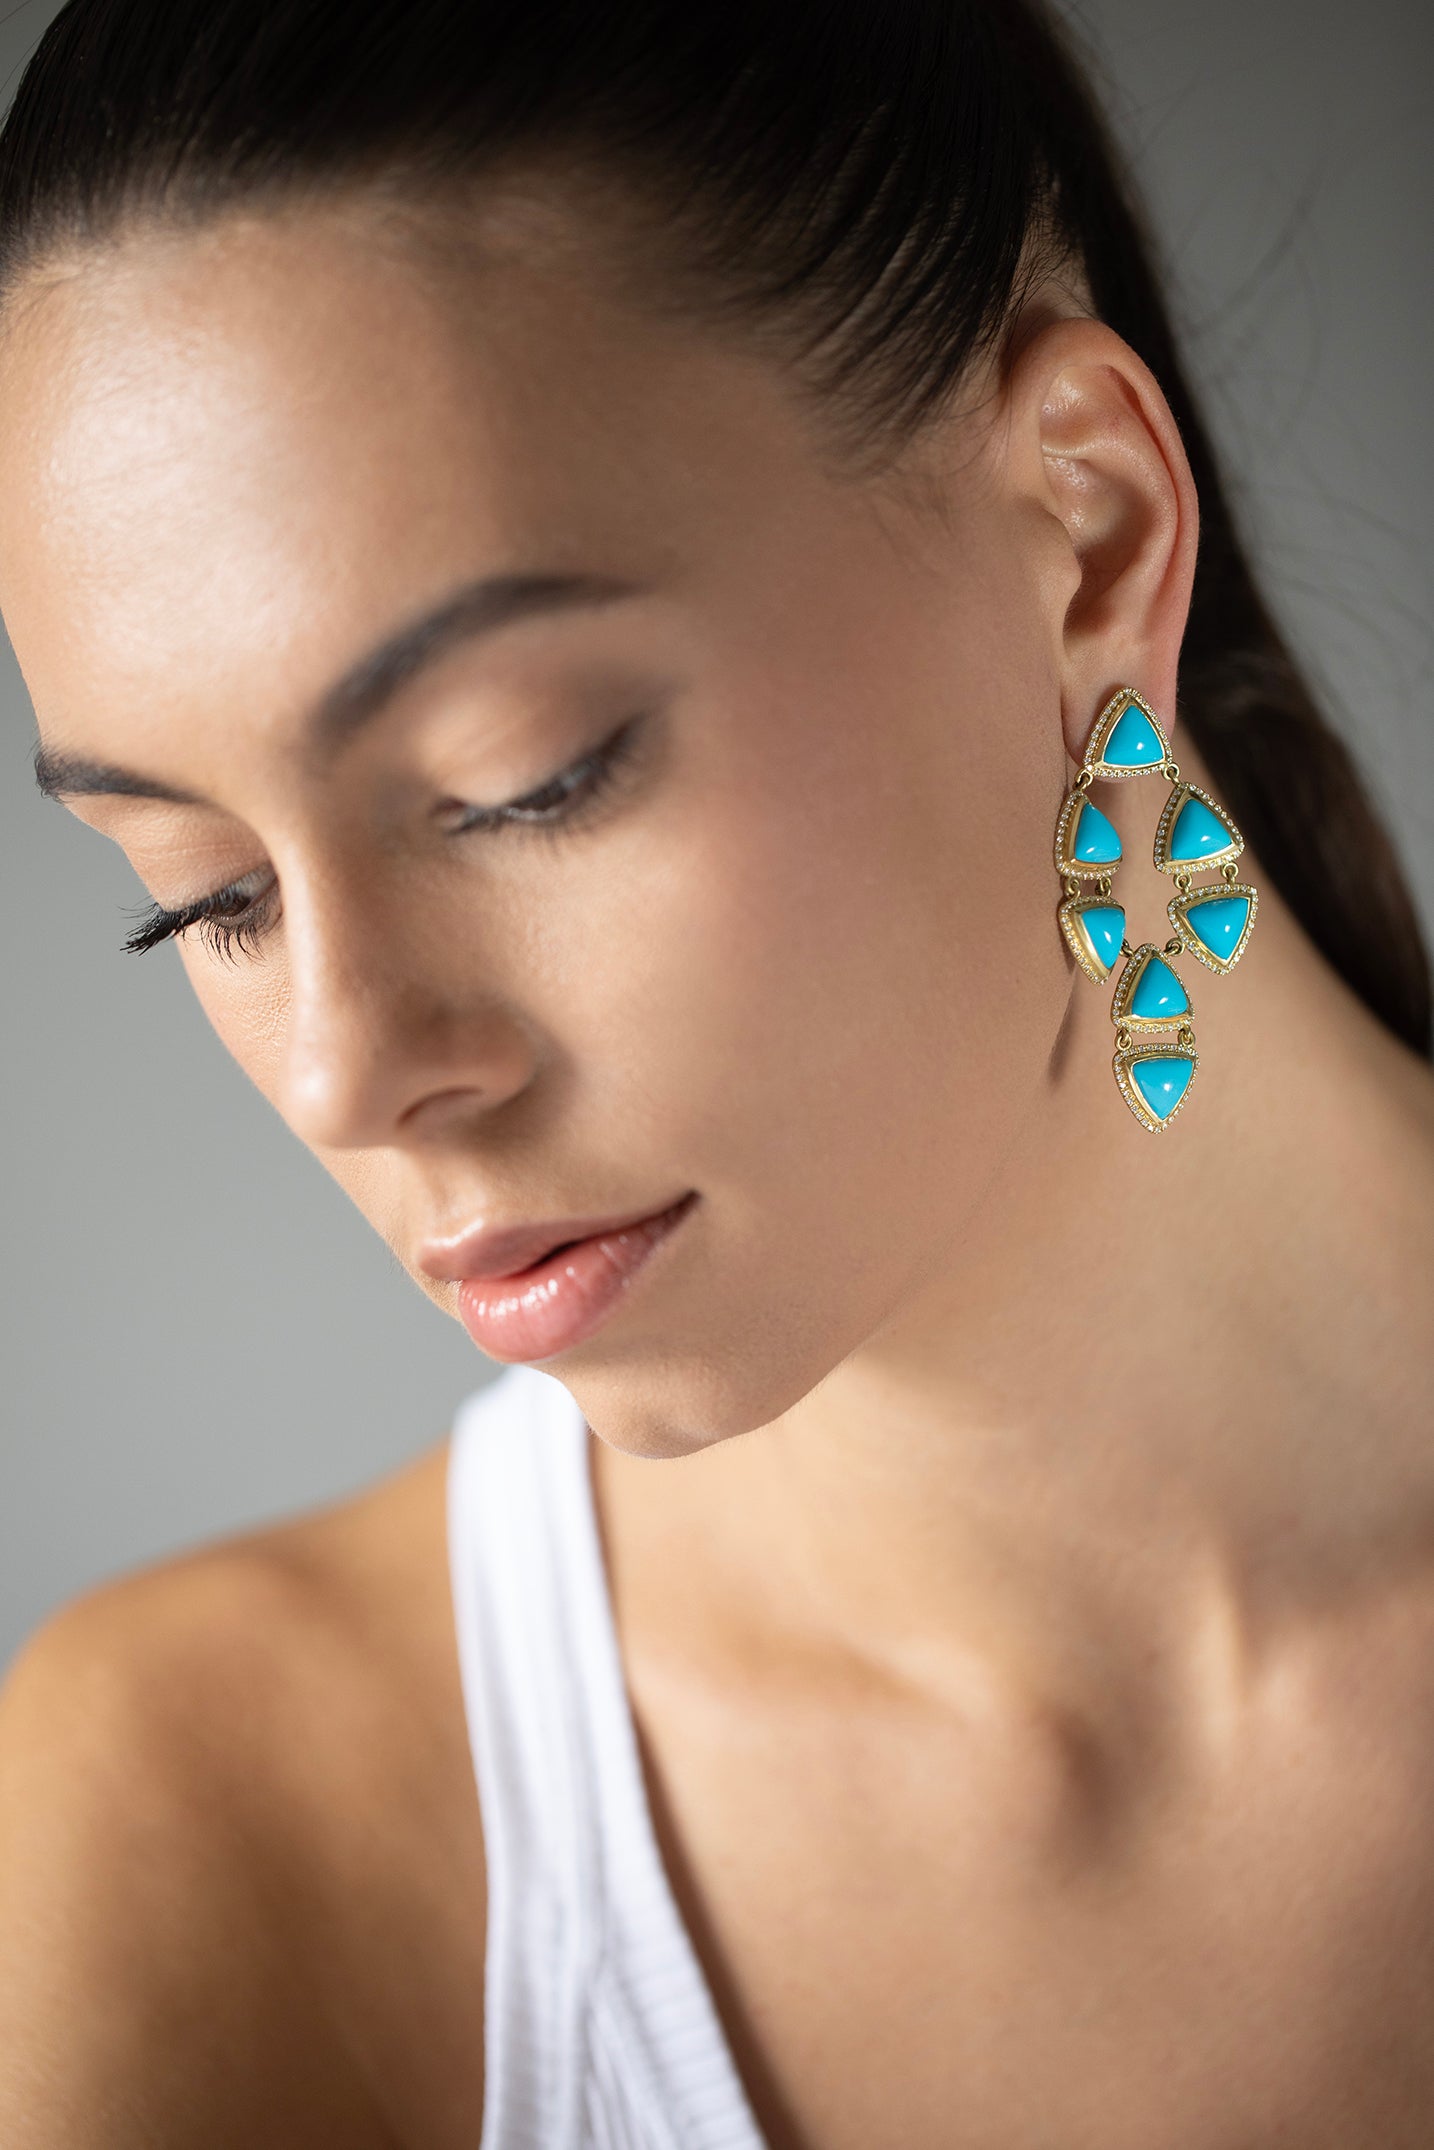 JARED LEHR-Turquoise Diamond Drop Earrings-YELLOW GOLD